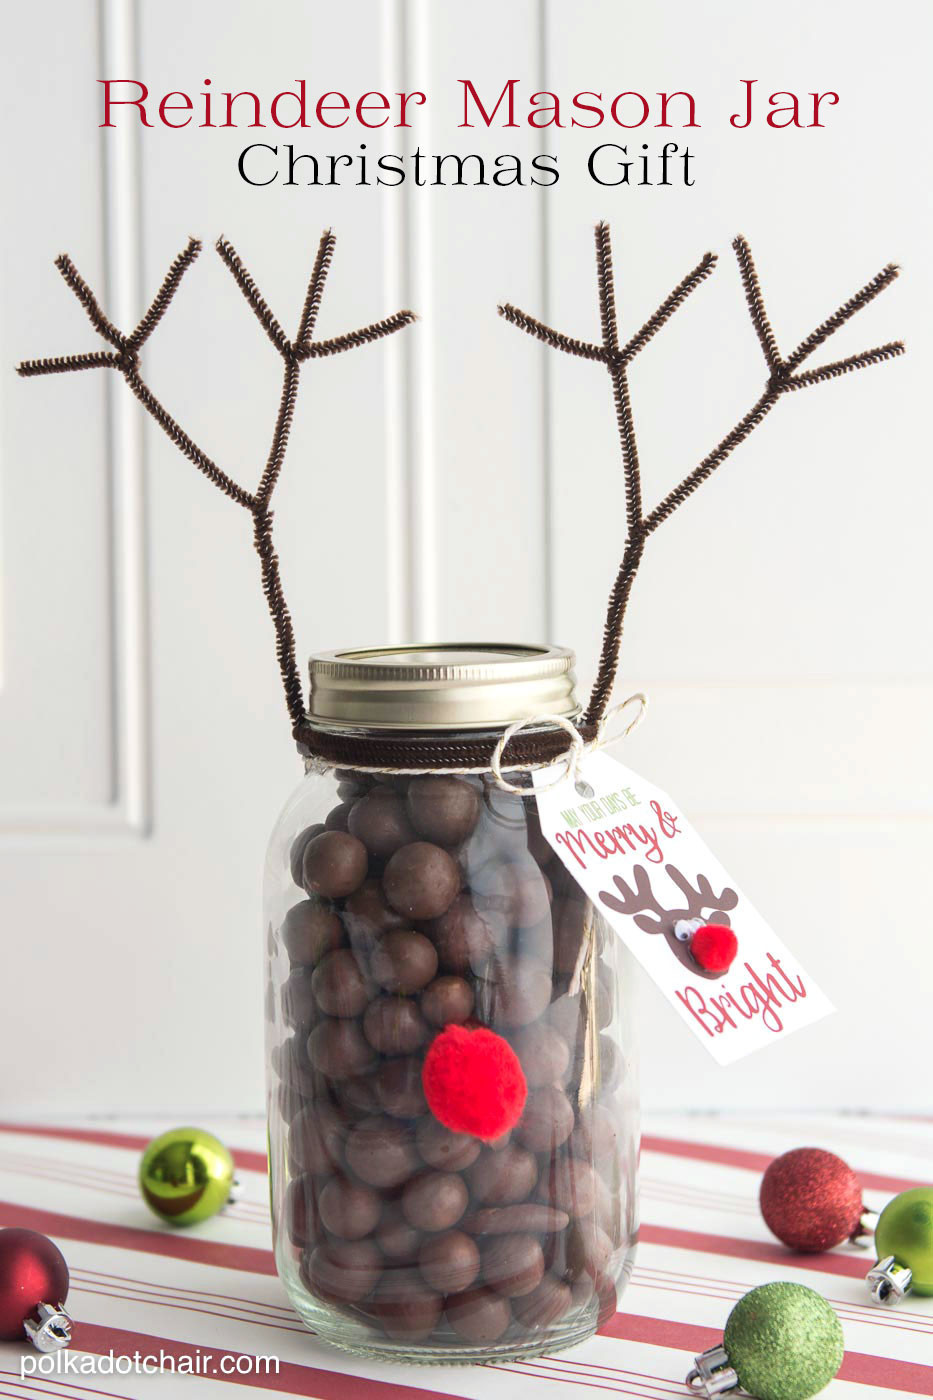 Best ideas about Mason Jar Gift Ideas For Christmas
. Save or Pin Mason Jar Christmas Gift Ideas The Idea Room Now.